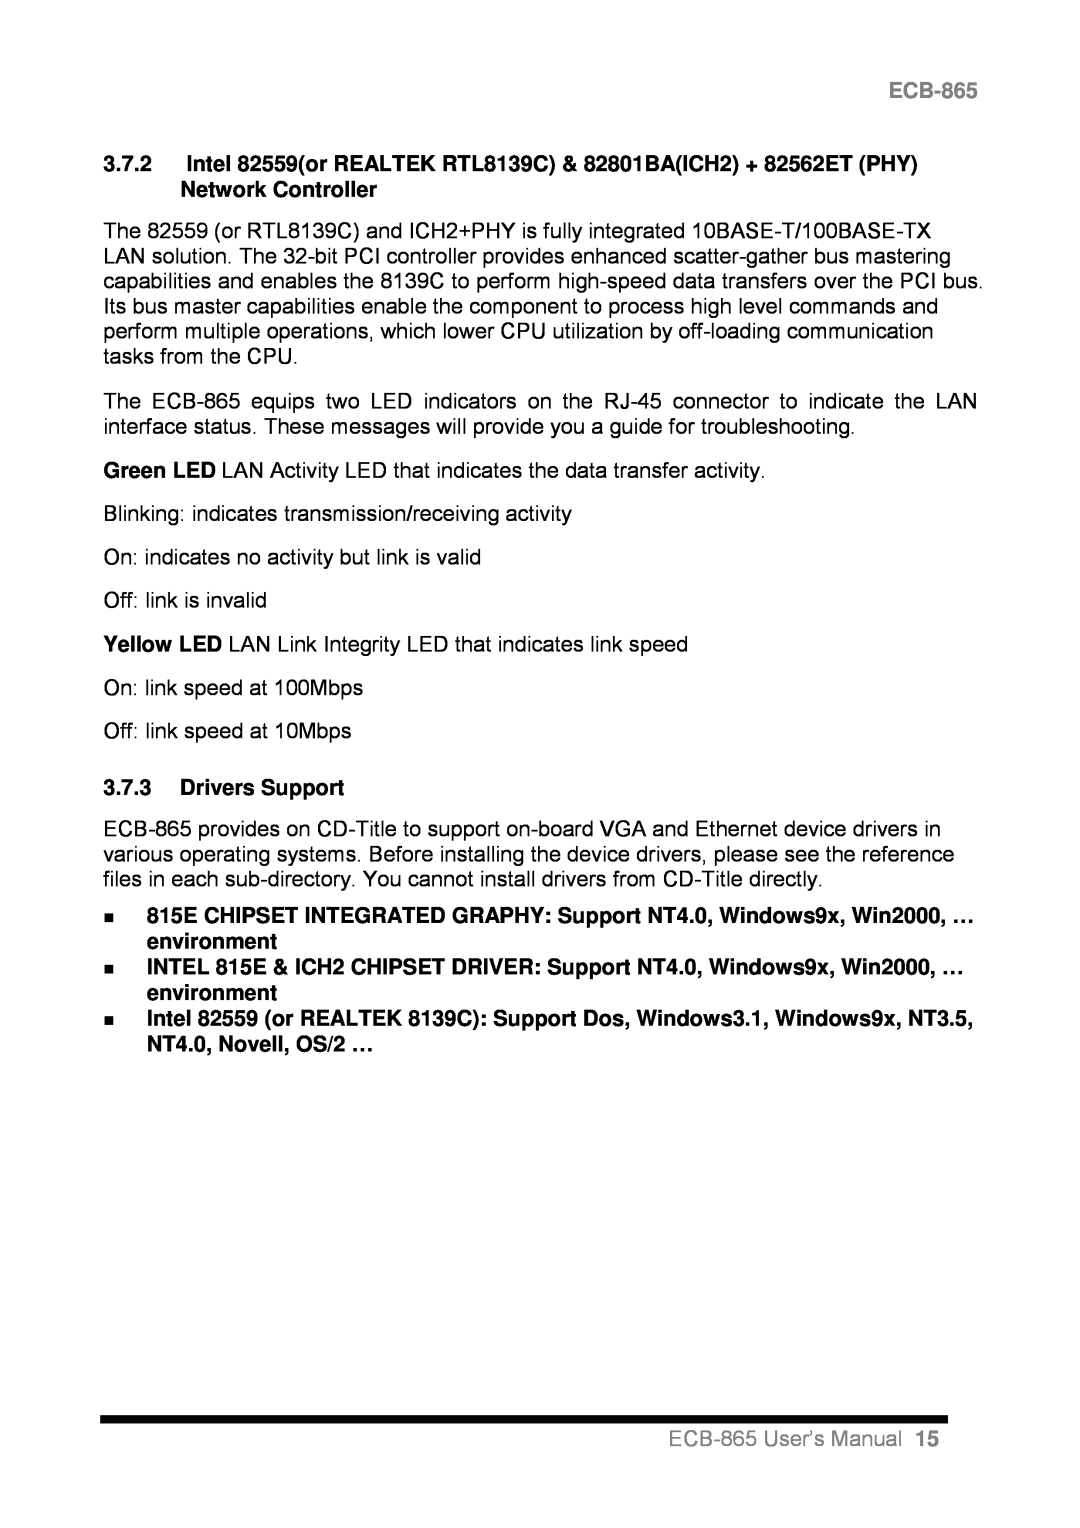 Intel user manual 3.7.3Drivers Support, ECB-865User’s Manual 